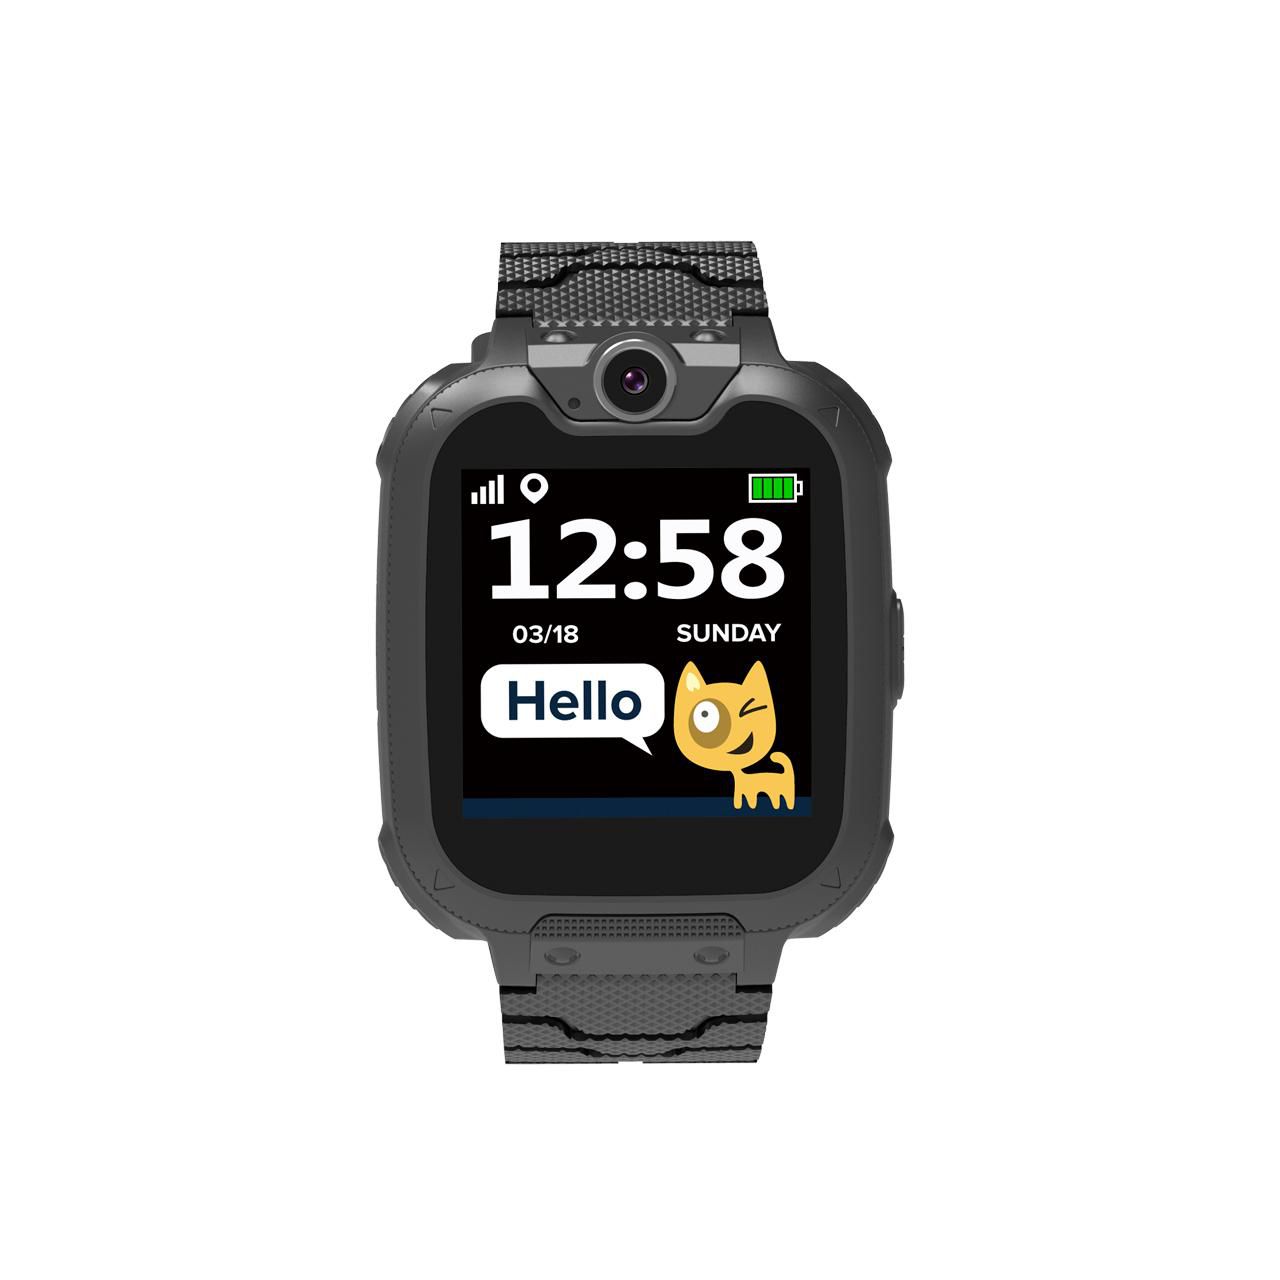 CANYON Smartwatch Kids Tony  KW-31 black  GSM Camera  ENG retail